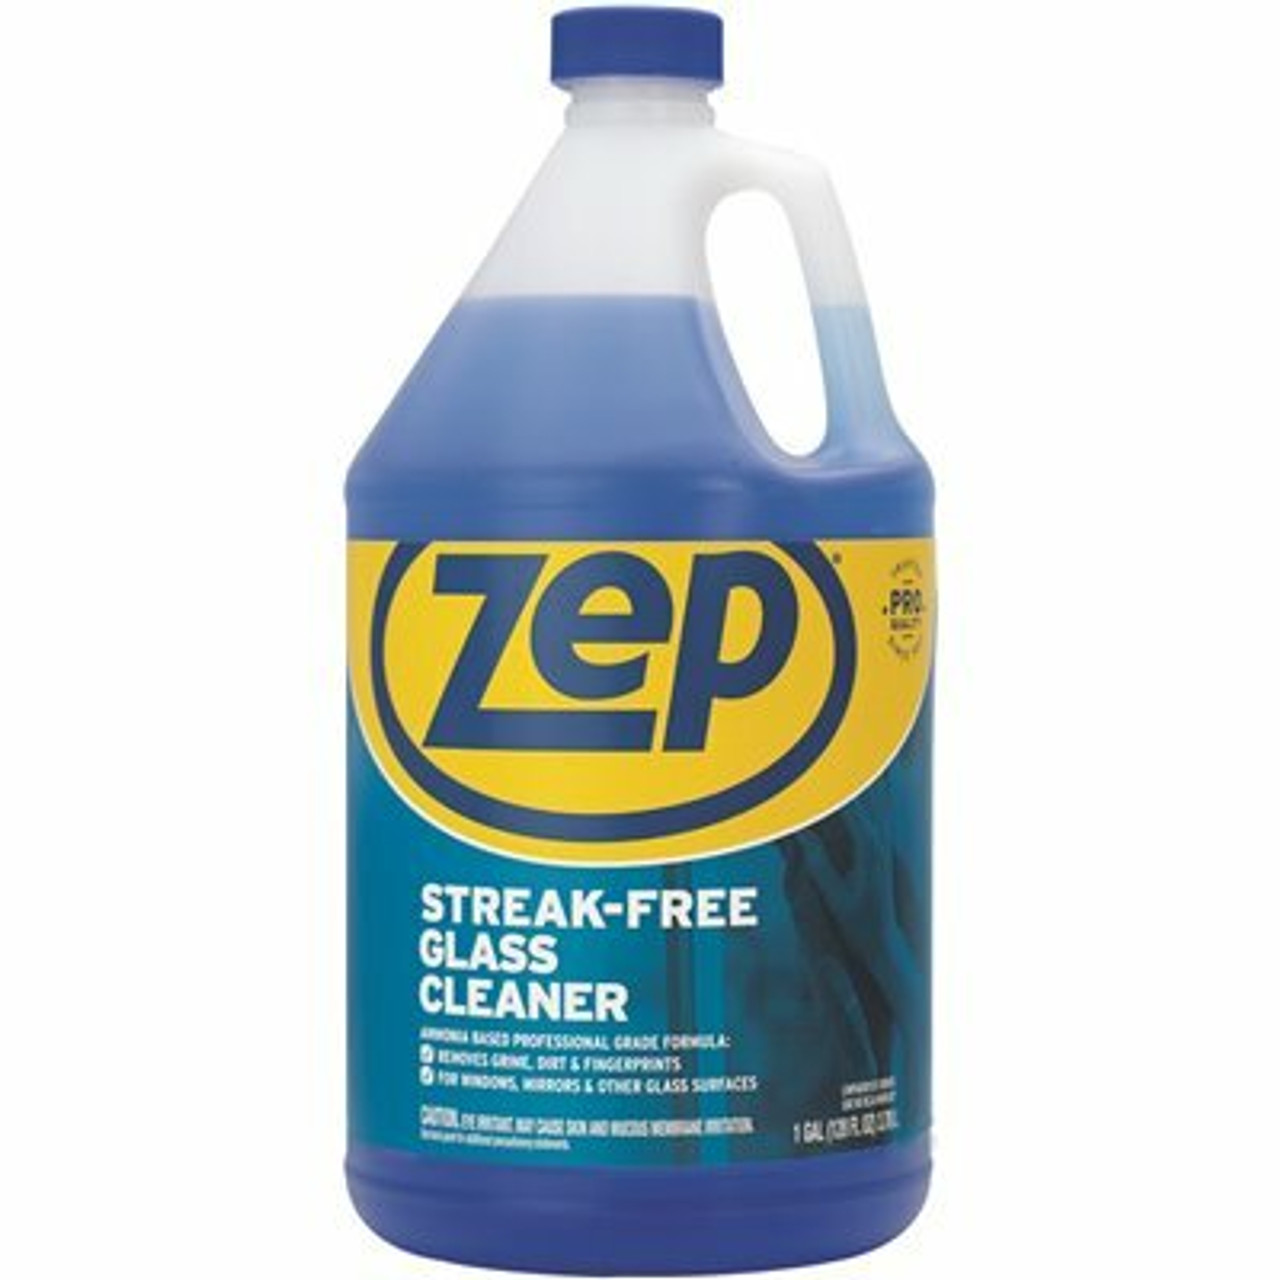 Zep 1 Gal. Streak-Free Glass Cleaner